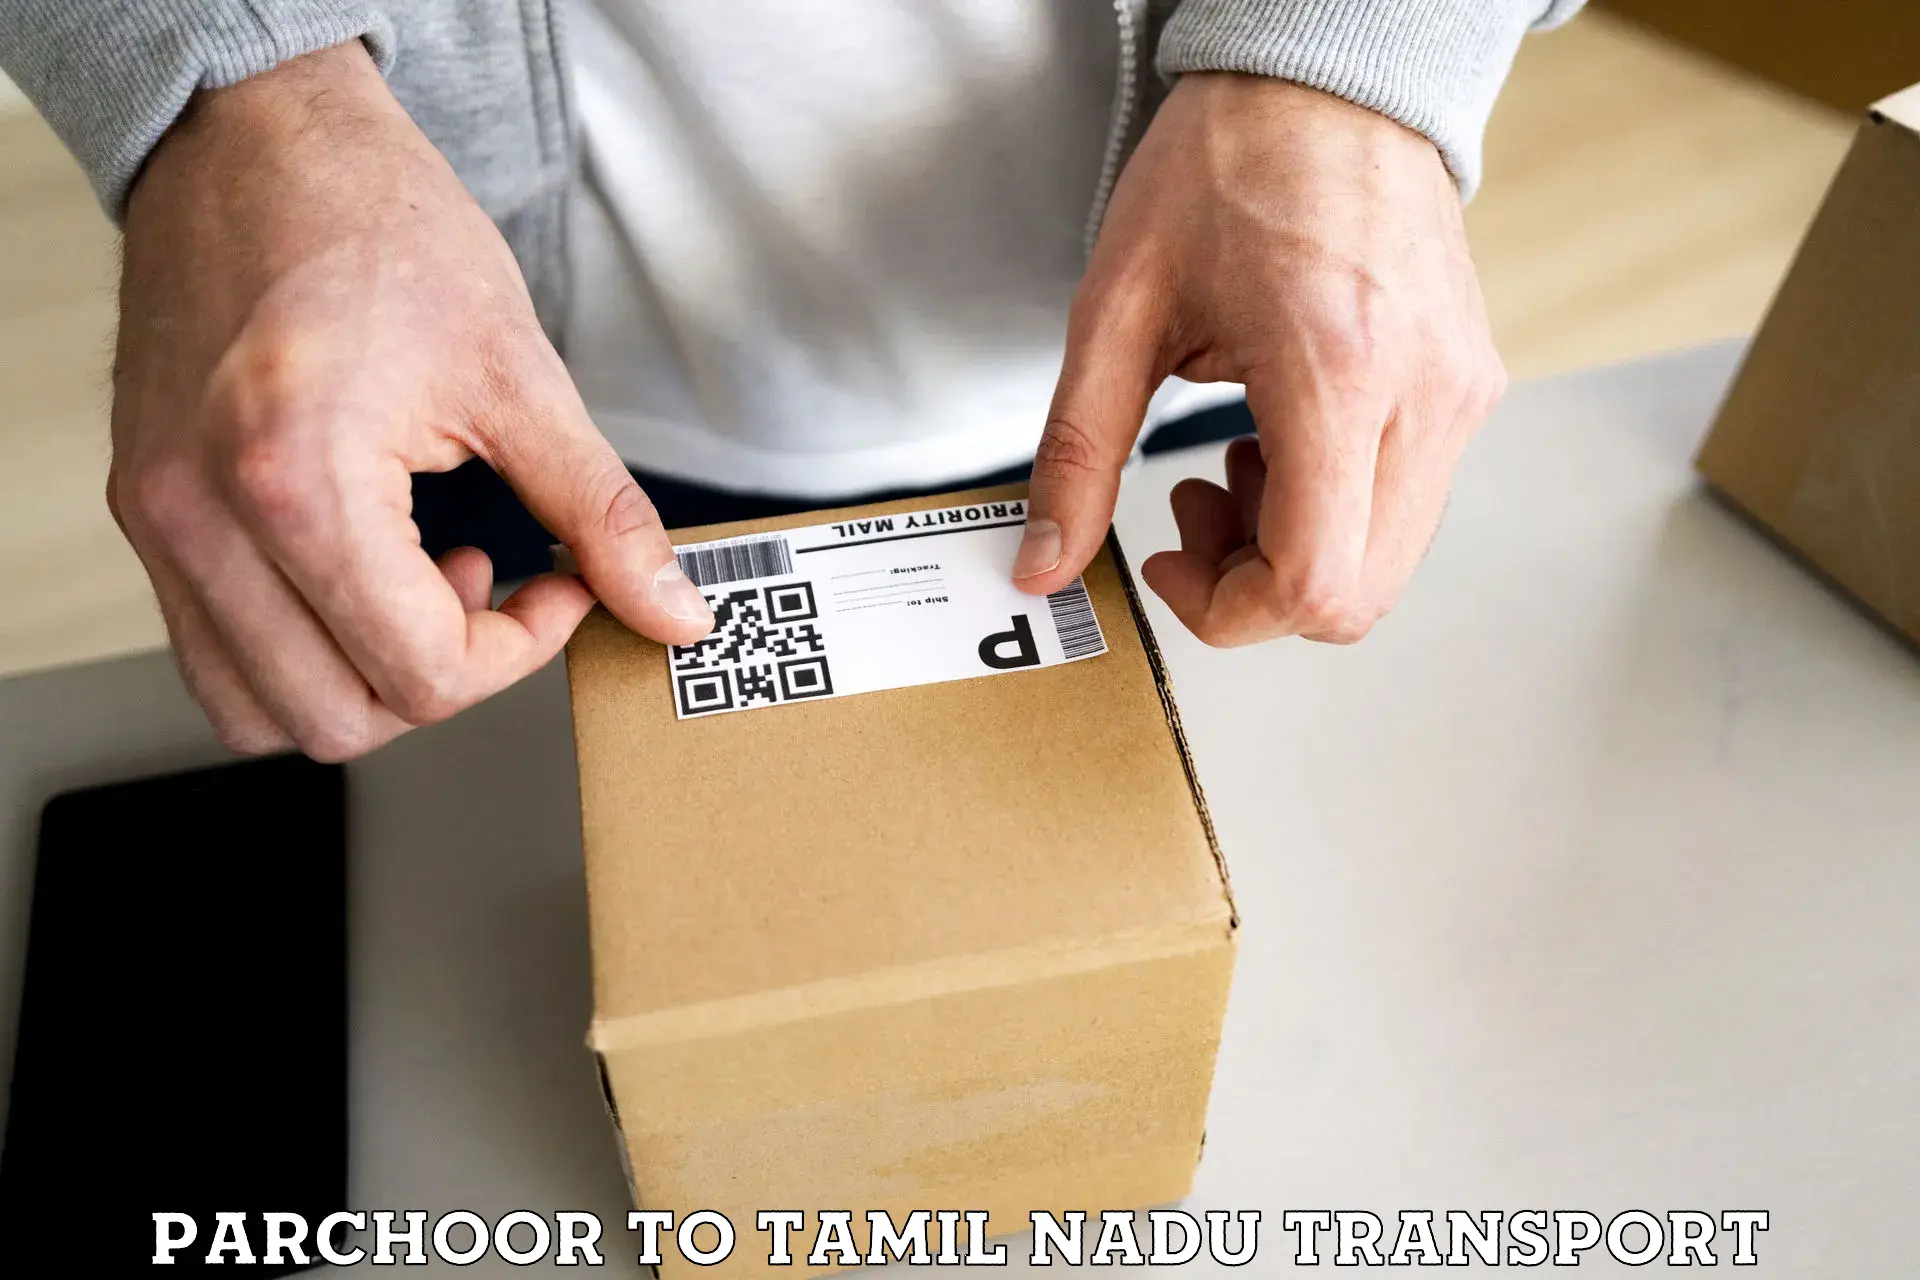 Transportation services Parchoor to Tamil Nadu Veterinary and Animal Sciences University Chennai